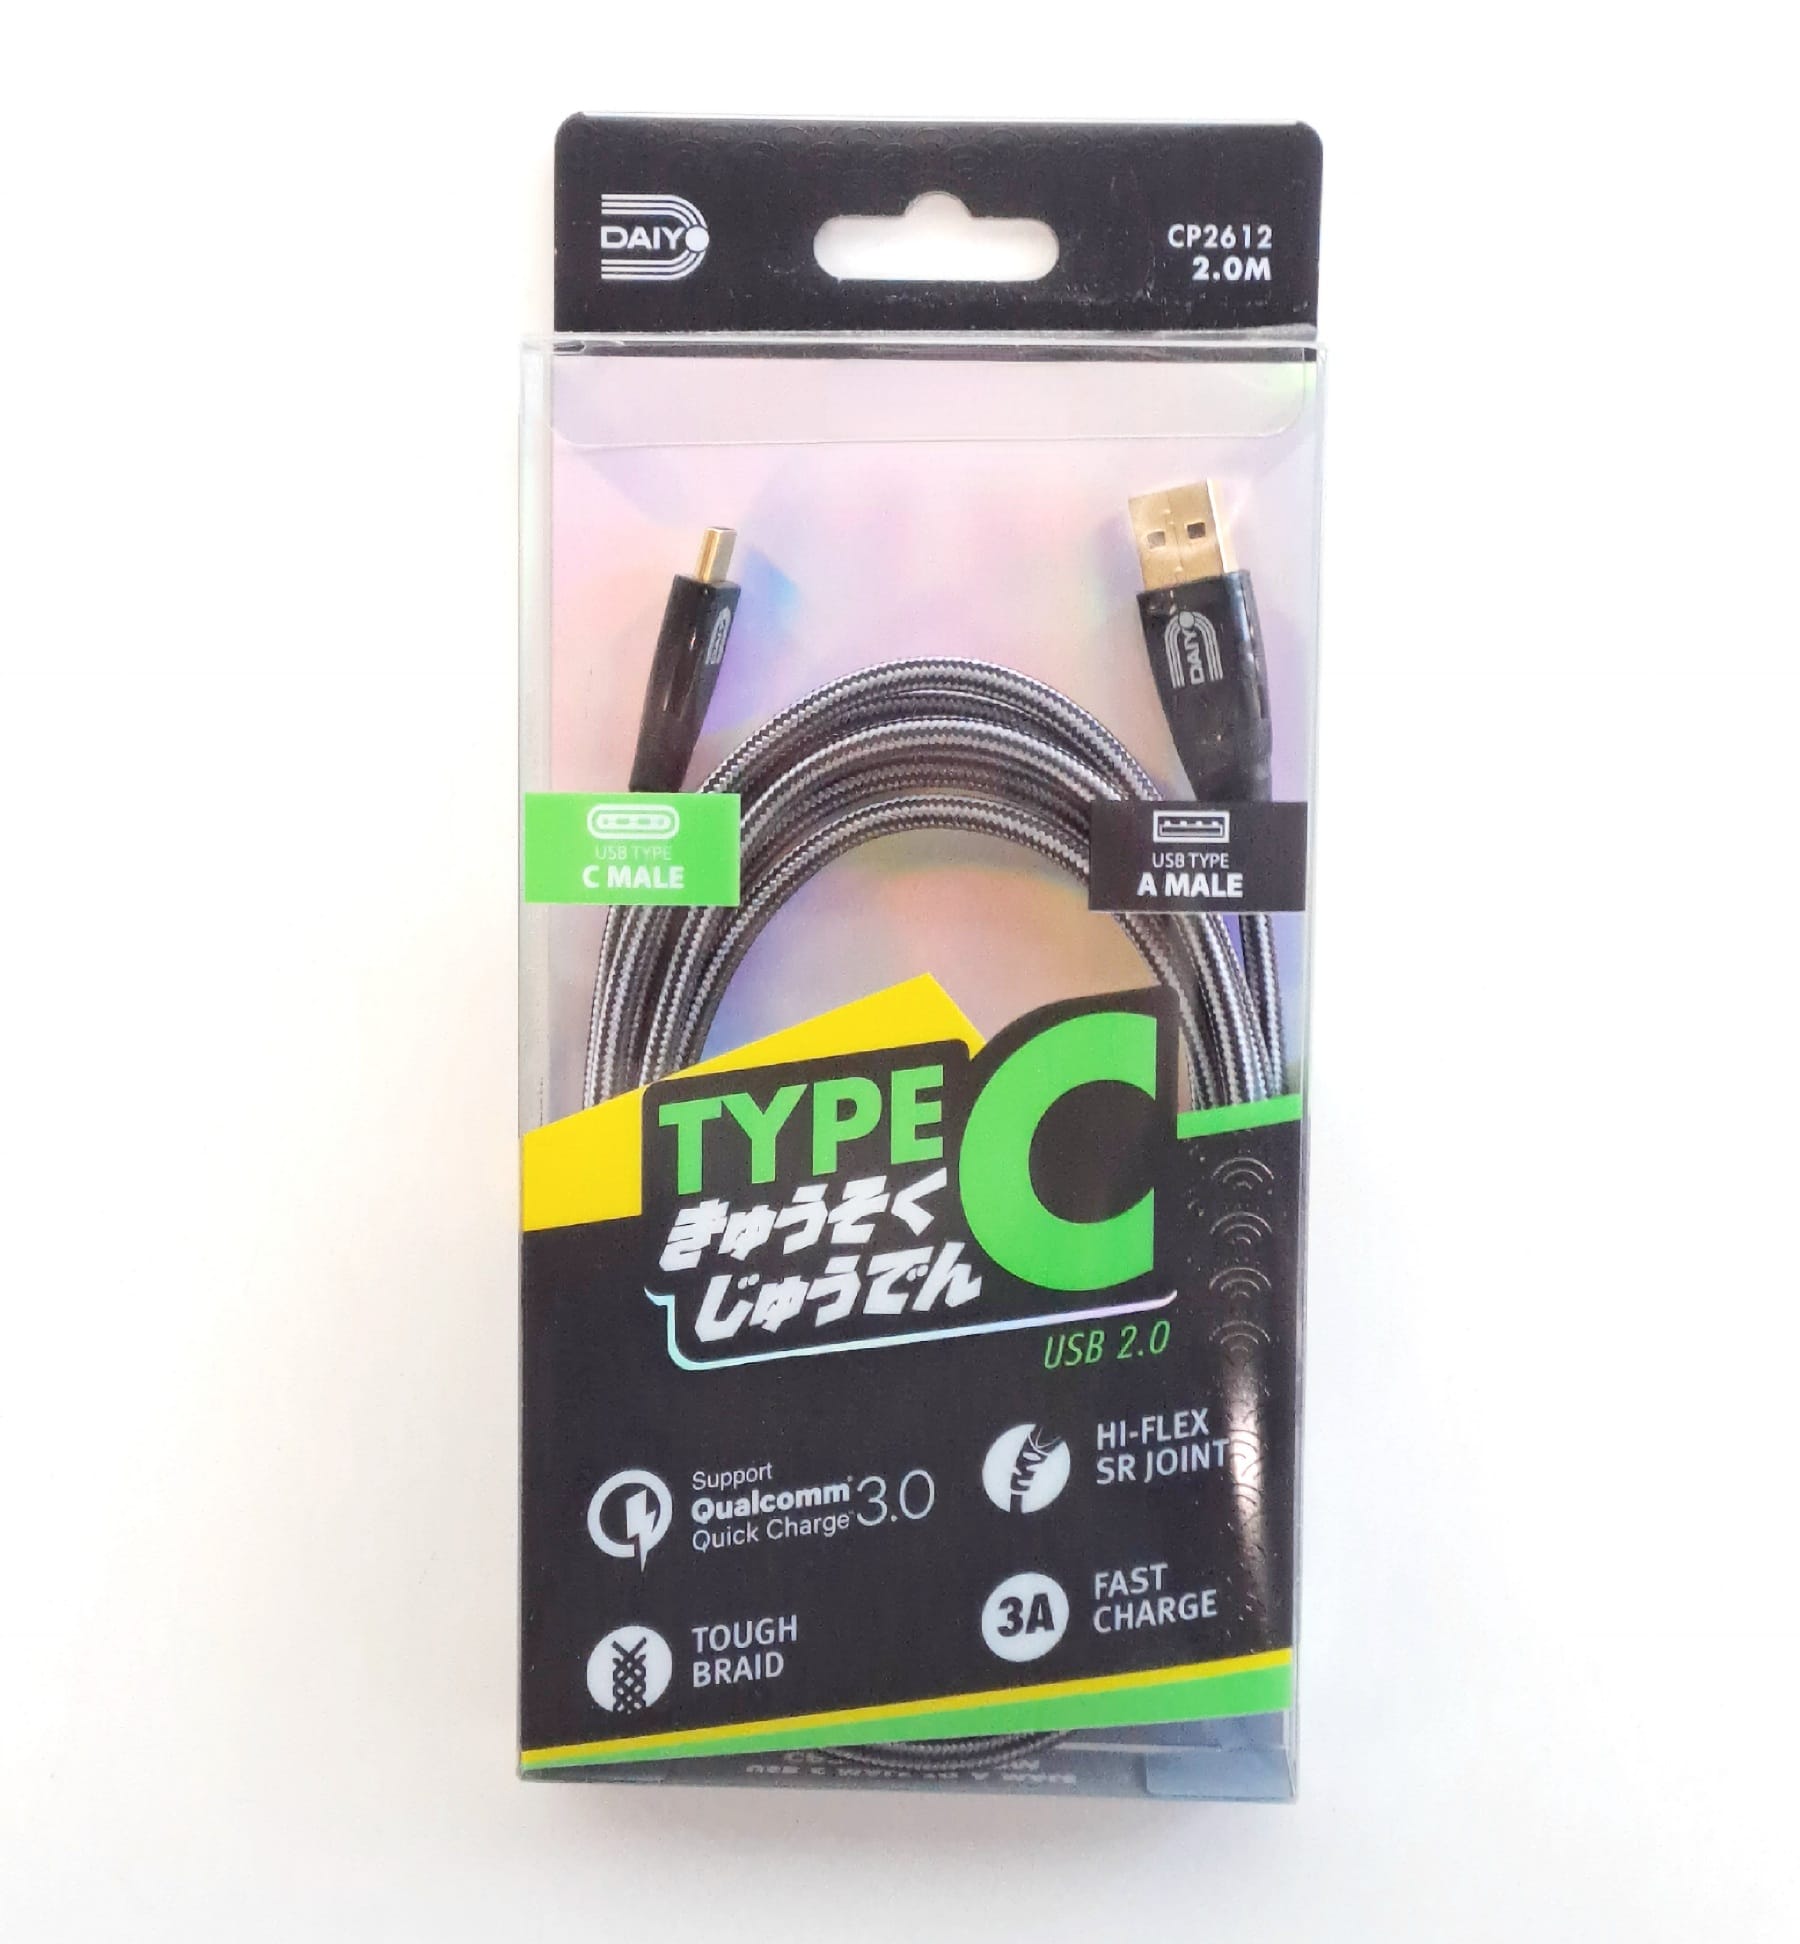 Daiyo USB 2.0 Type C Cable – AM/CM ECO 2.0M